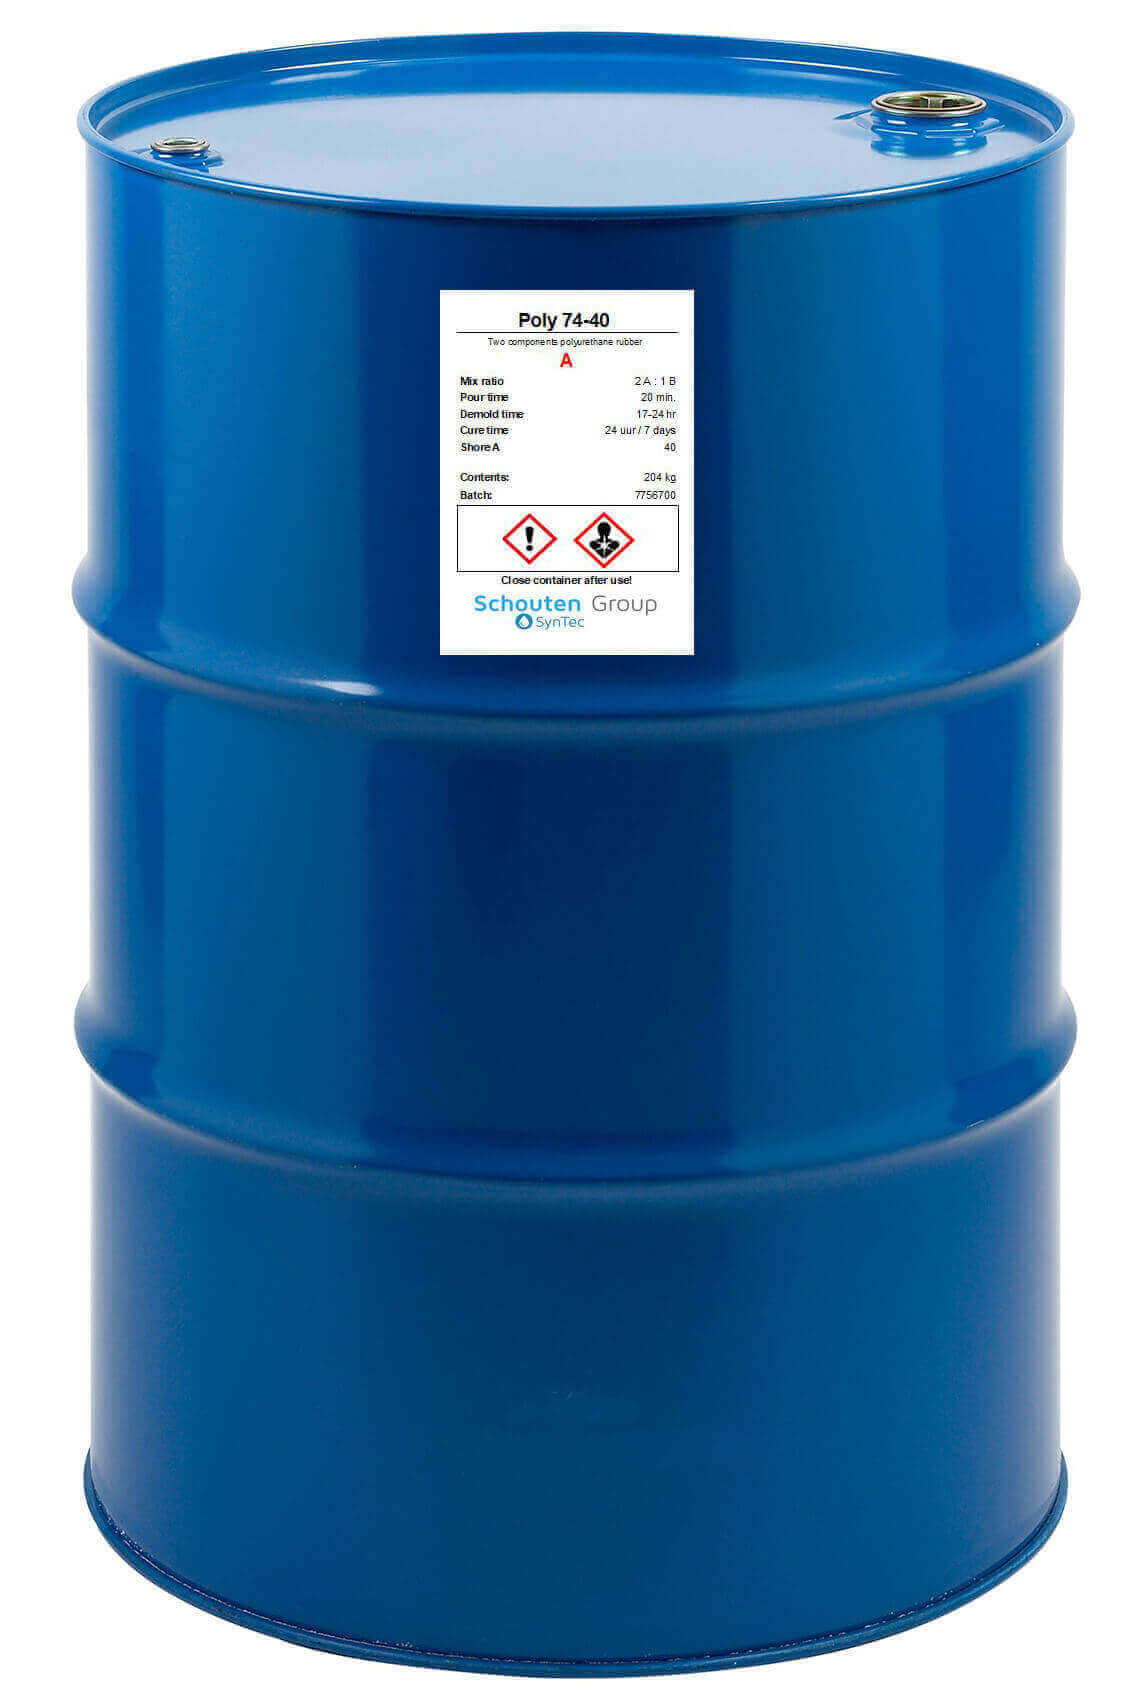 Beschaven grootmoeder infrastructuur Polyurethane liquid casting rubber Shore A40 (poly 74-40) - syntecshop.com